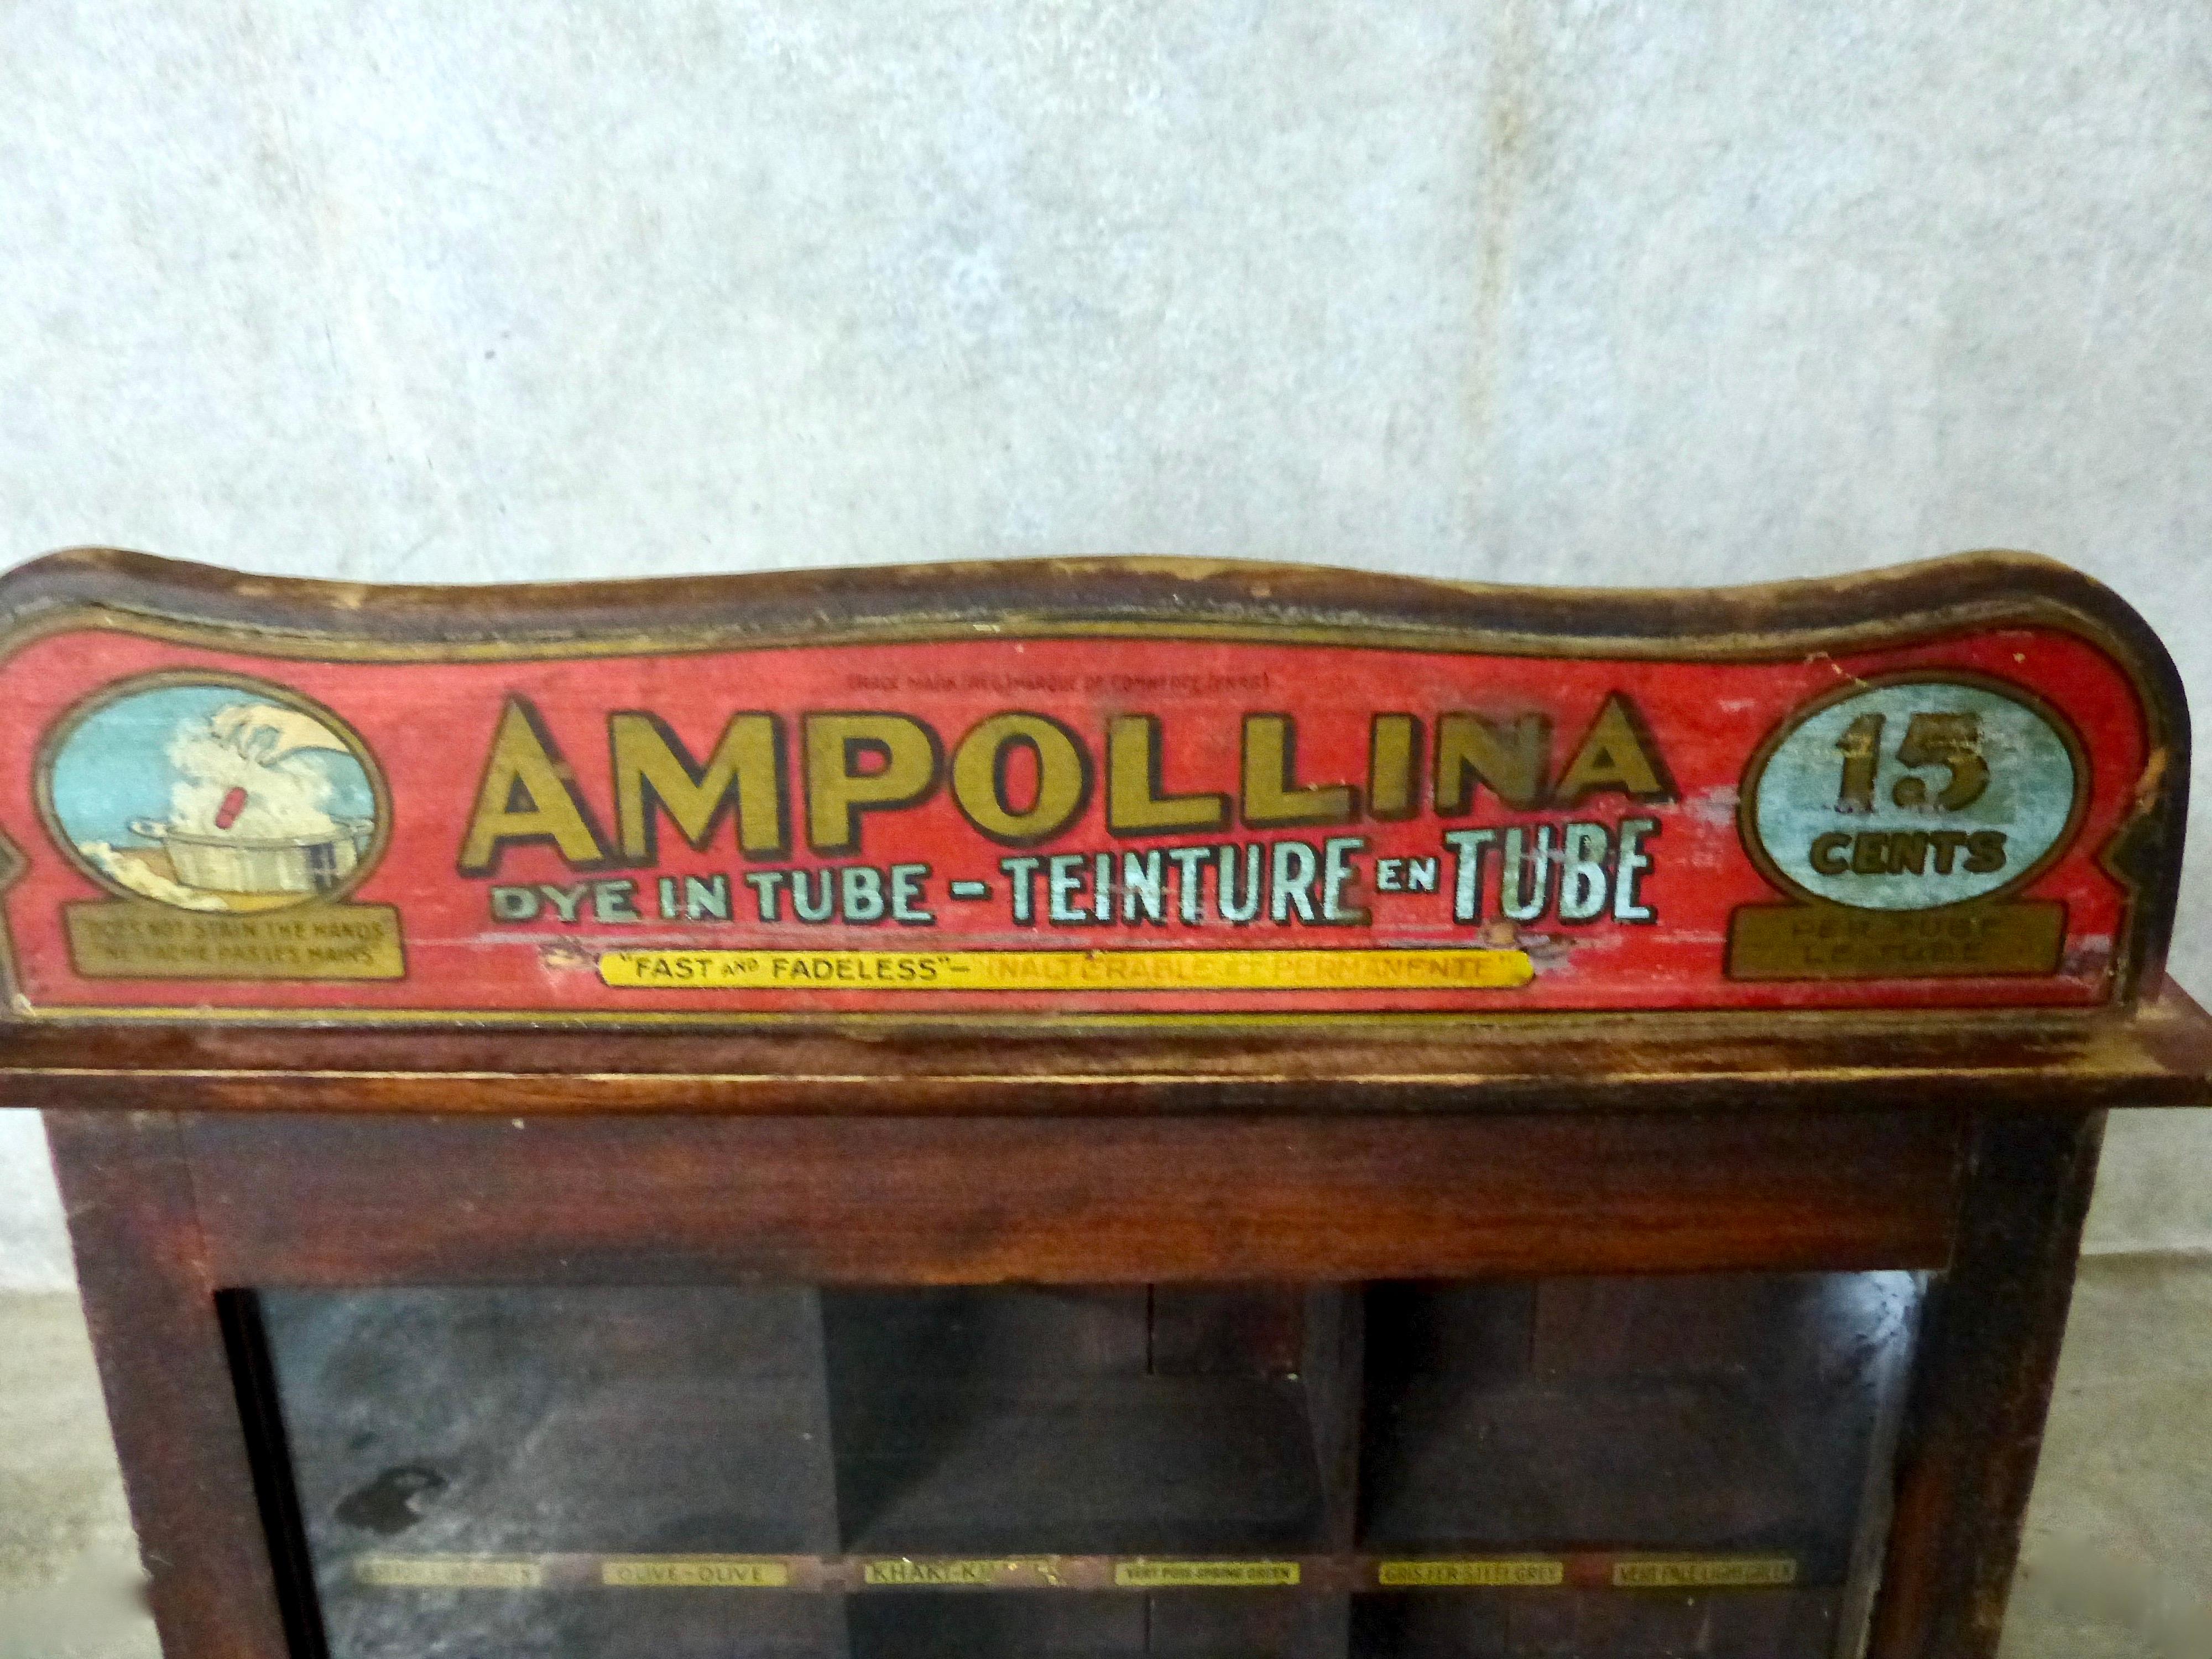 American Ampollina Dye Countertop Store Display Case, circa 1920